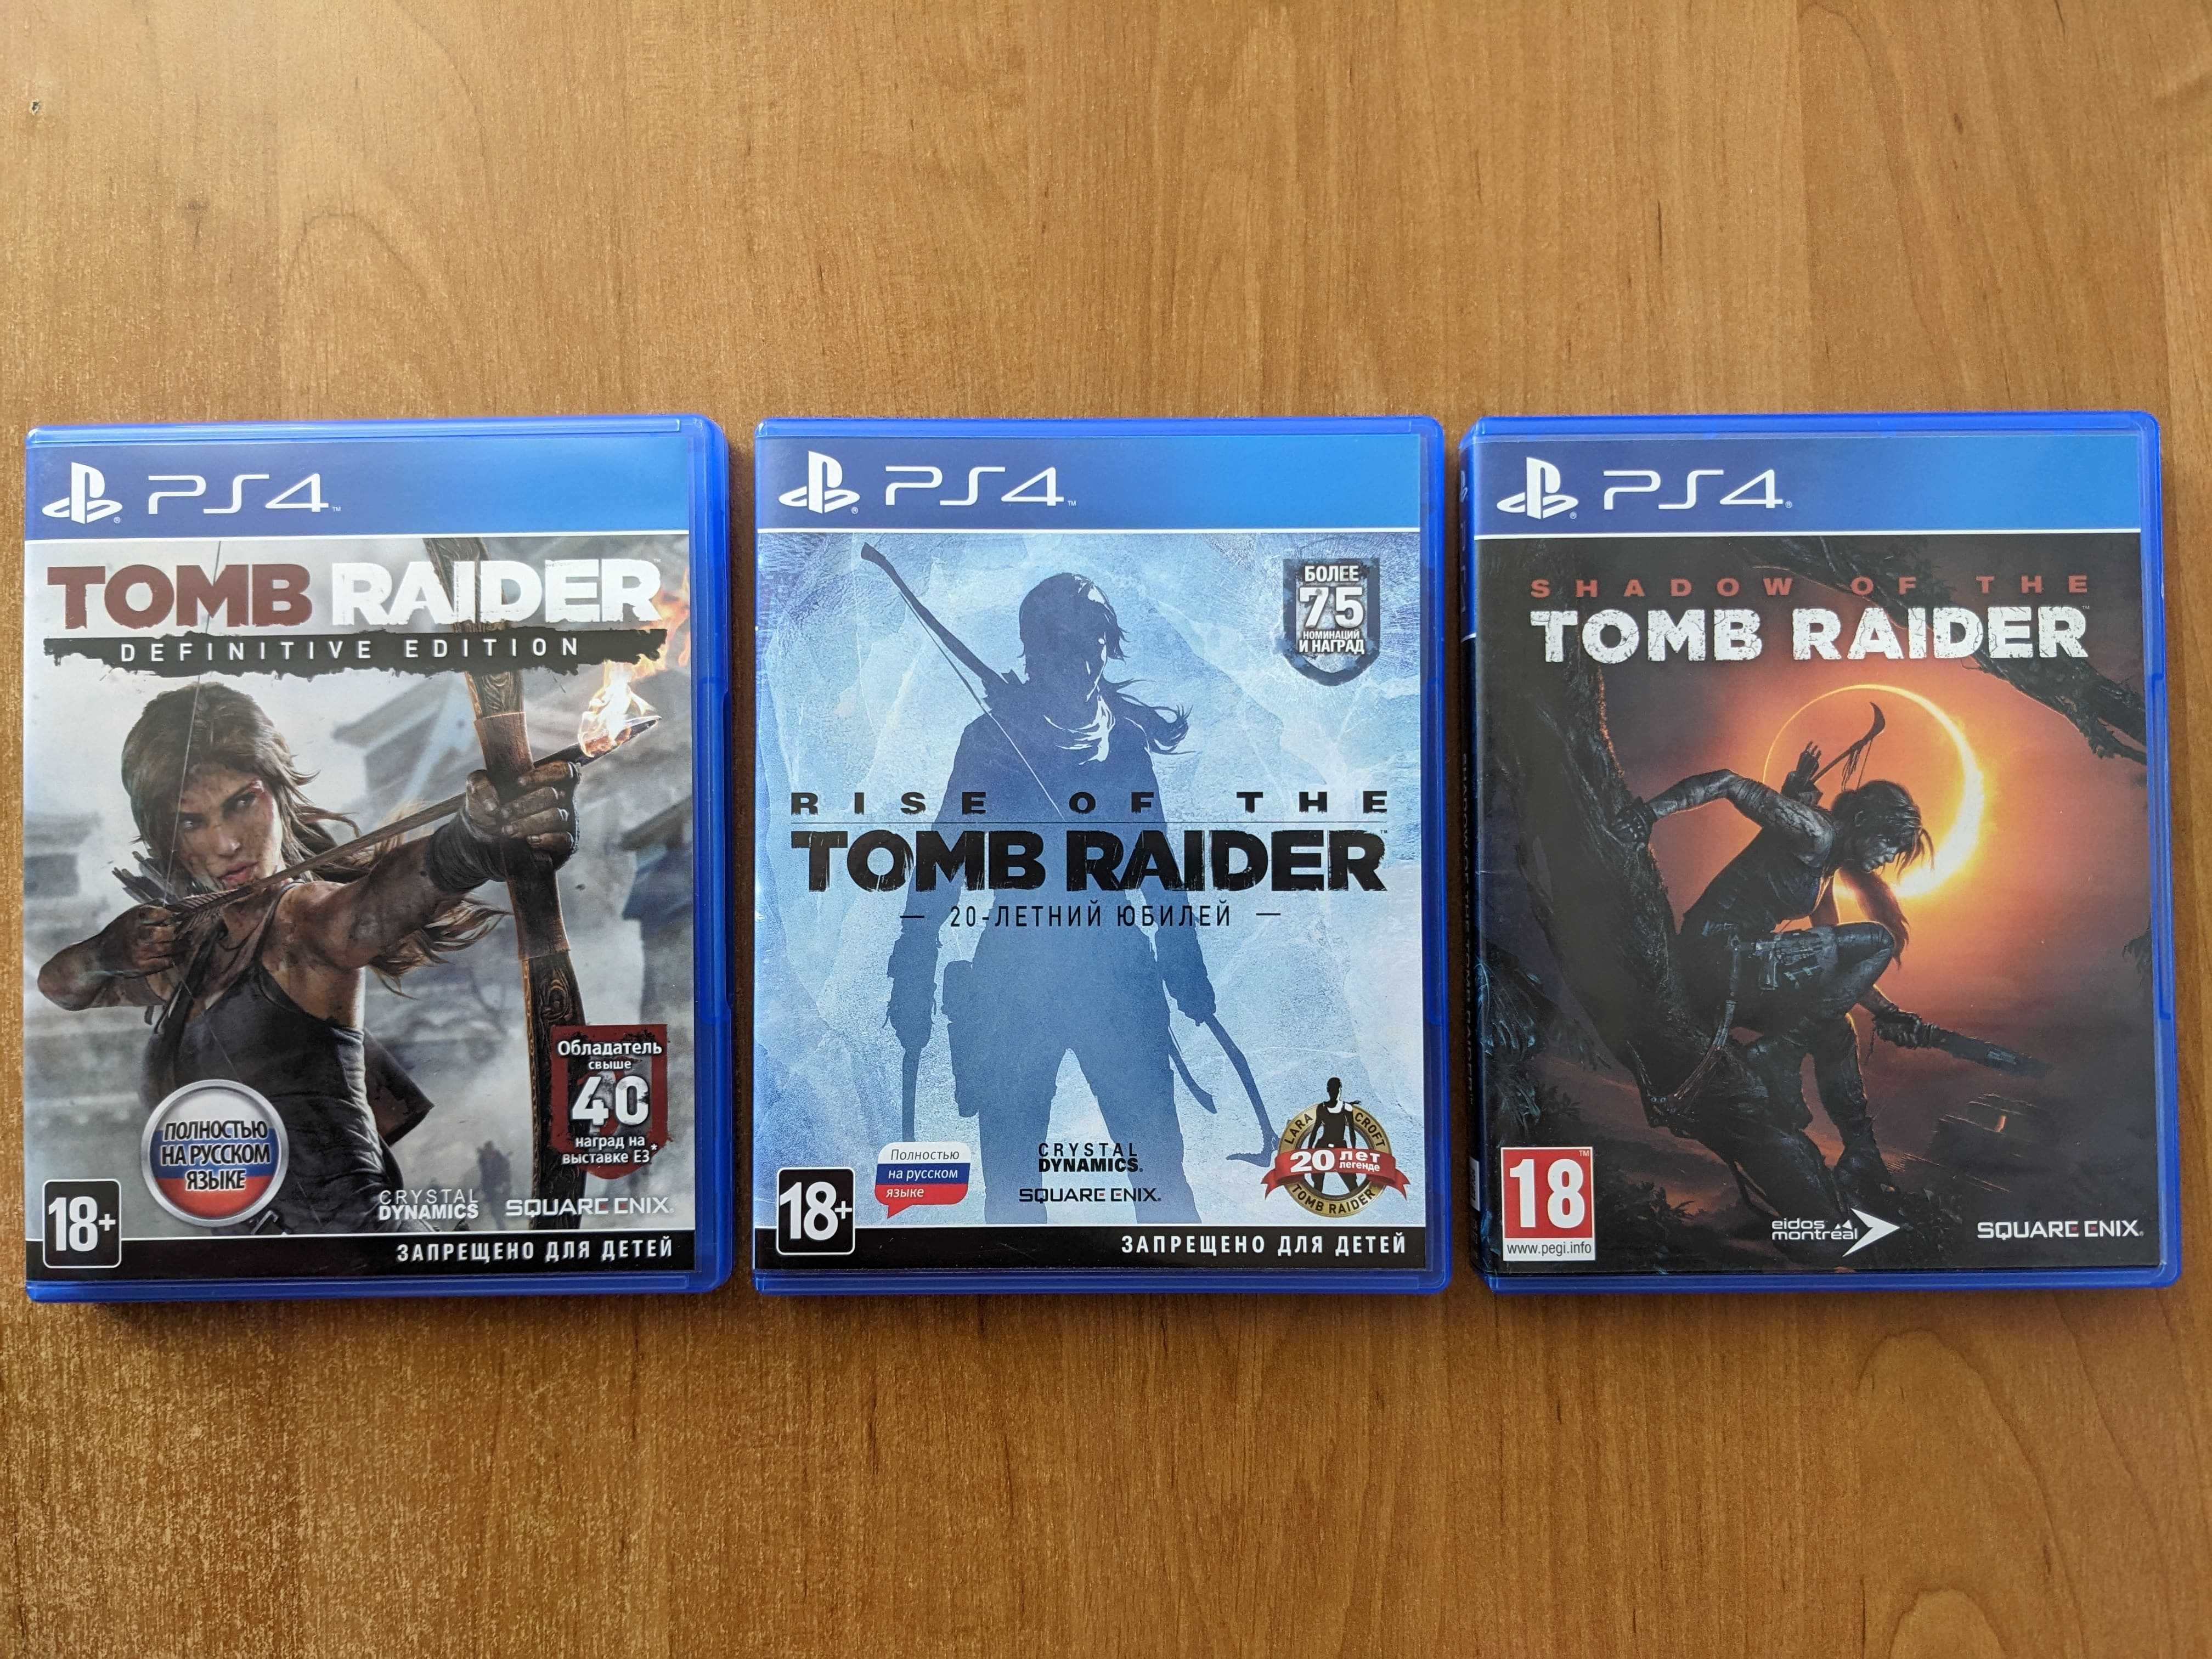 Диск с игрой Тomb Raider - Shadow of the Tomb Raider для PlayStation4